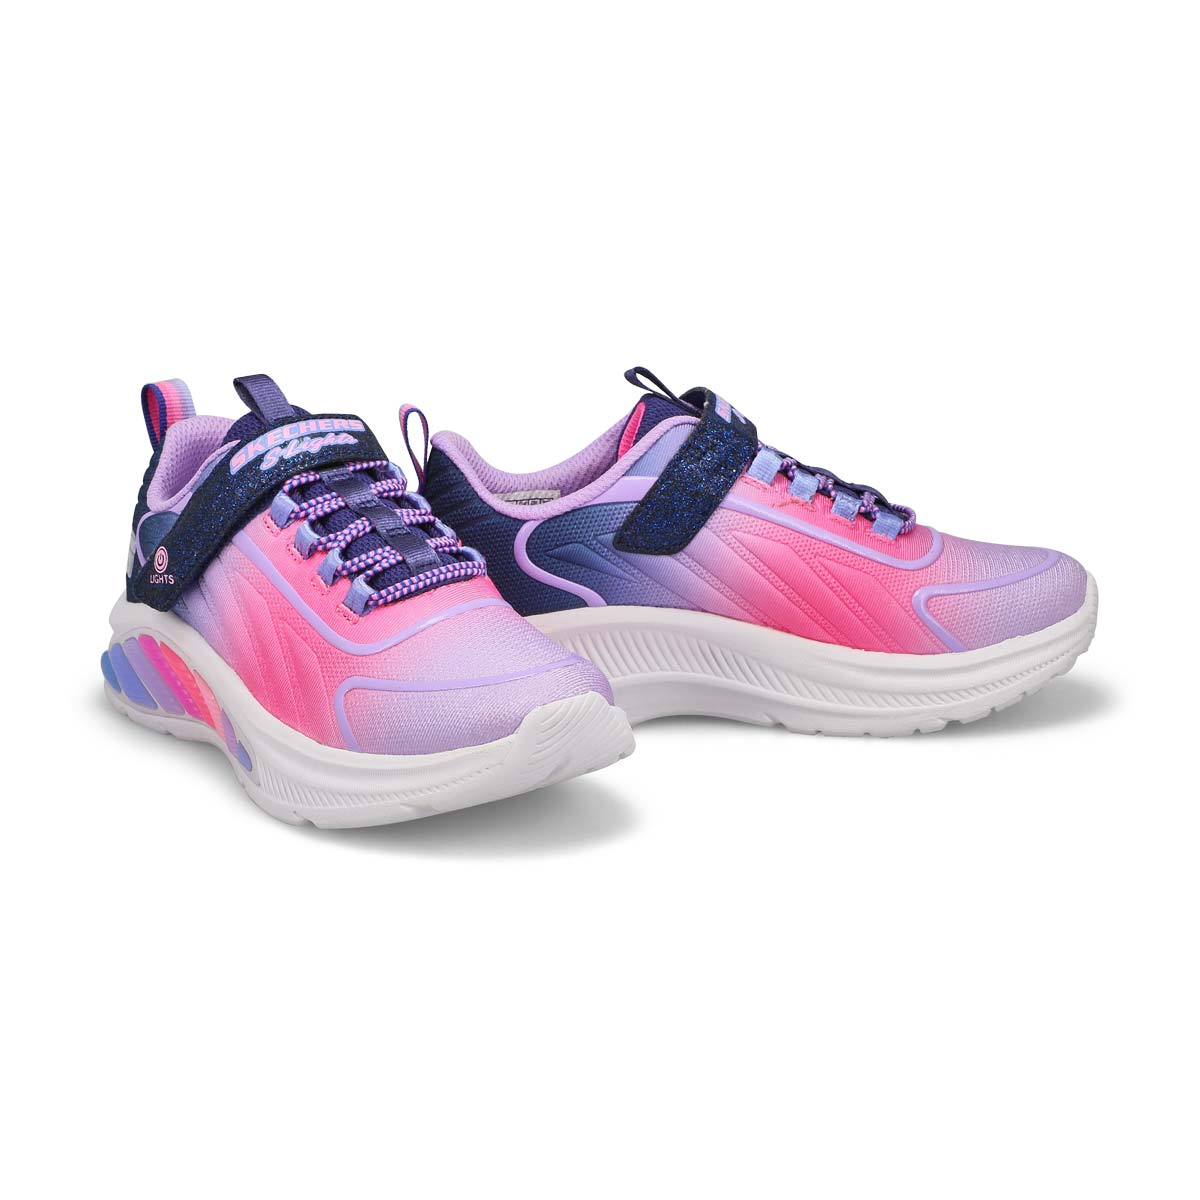 Girls'  Rainbow Cruisers Light Up Sneaker - Navy/Multi